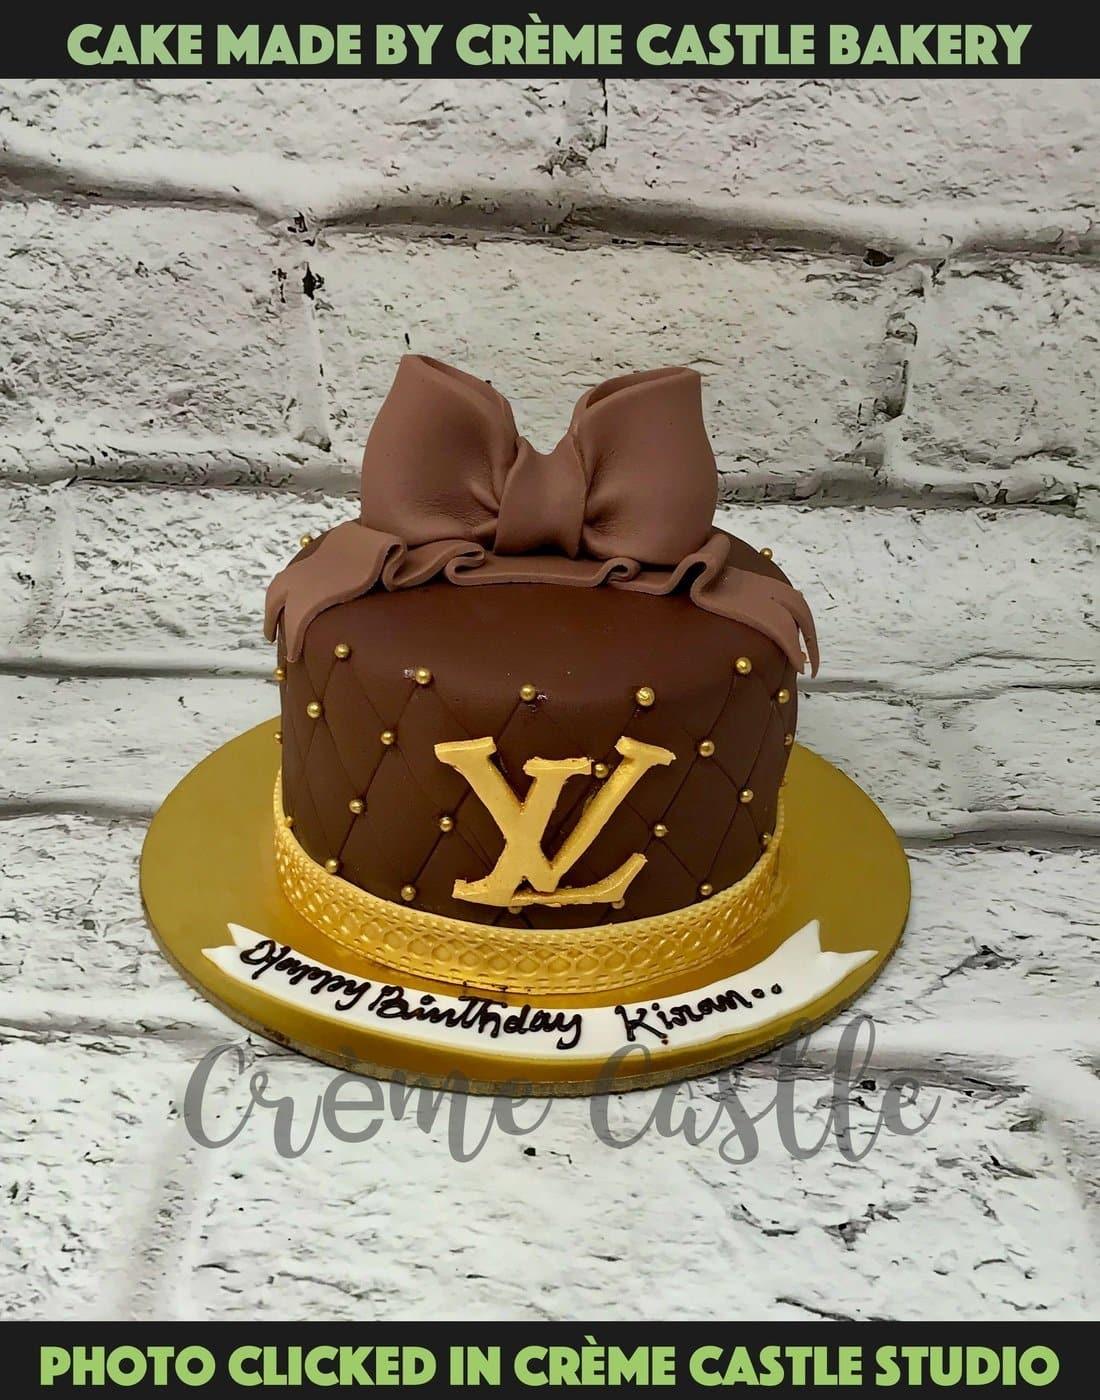 Louis Vuitton Design Cake - Creme Castle